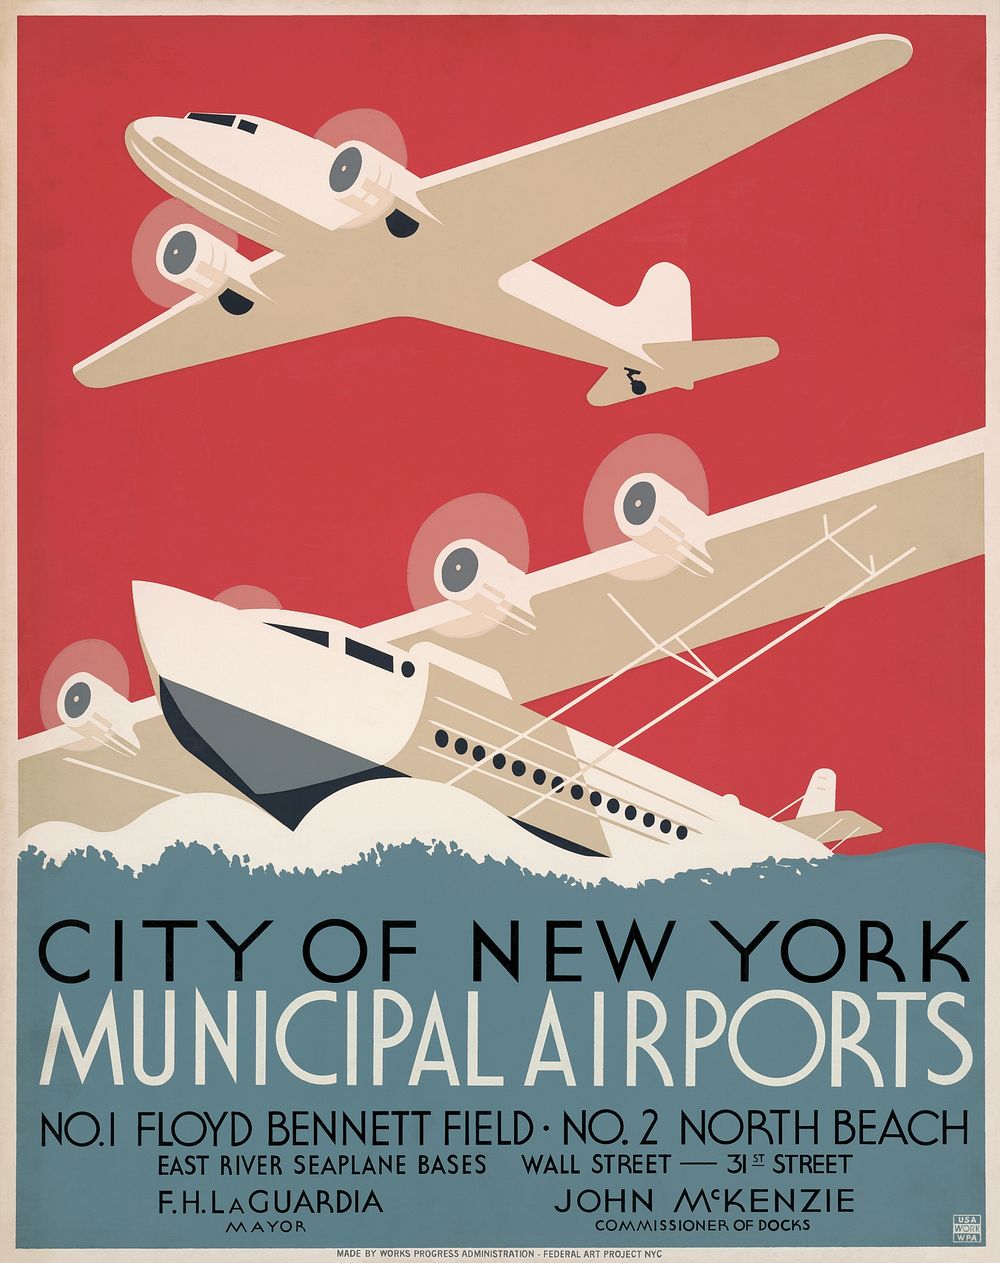 City of New York municipal airports No. 1 Floyd Bennett Field - No. 2 North Beach. (1930-1940). Original public domain image…